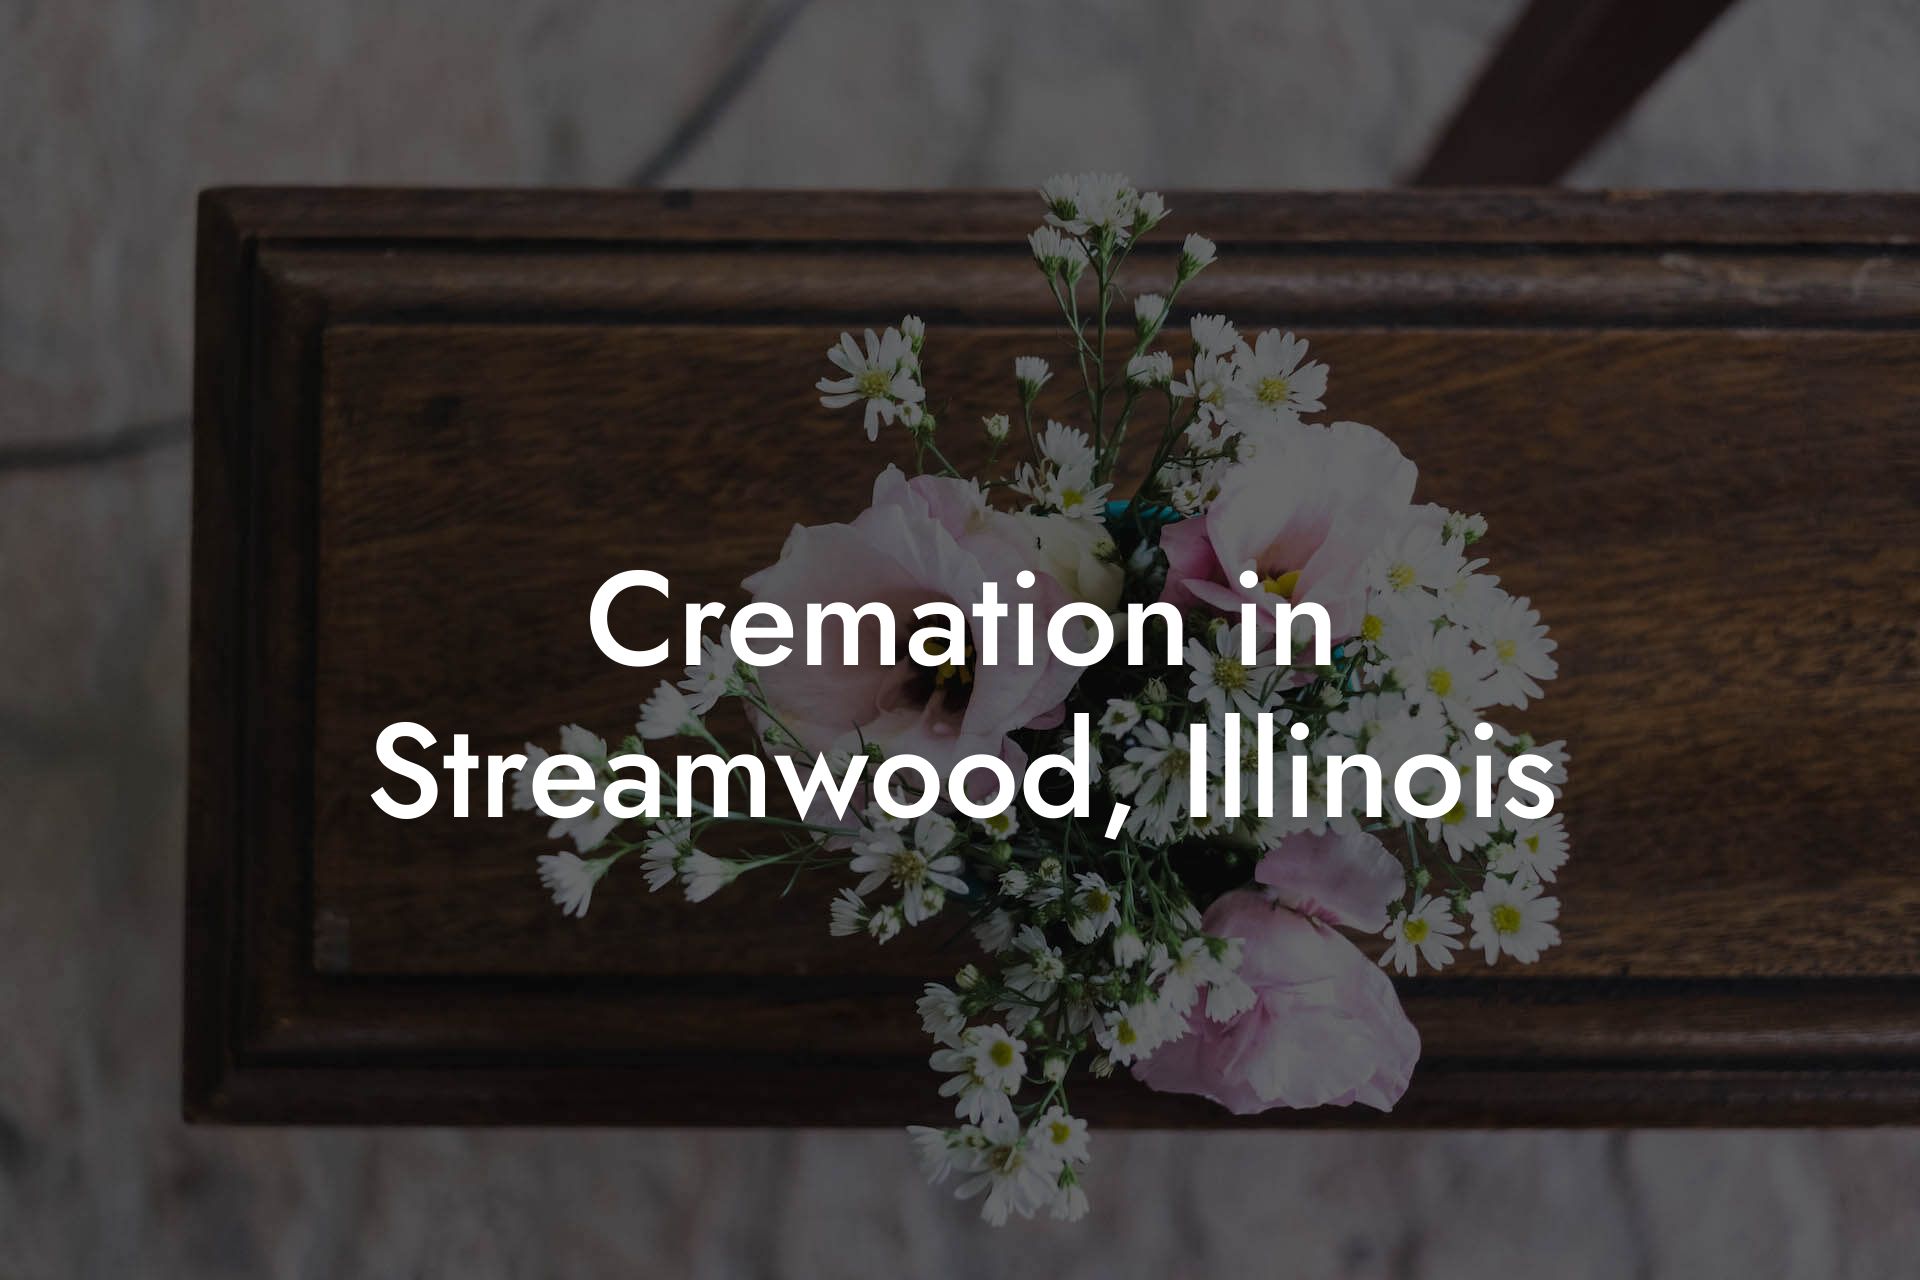 Cremation in Streamwood, Illinois